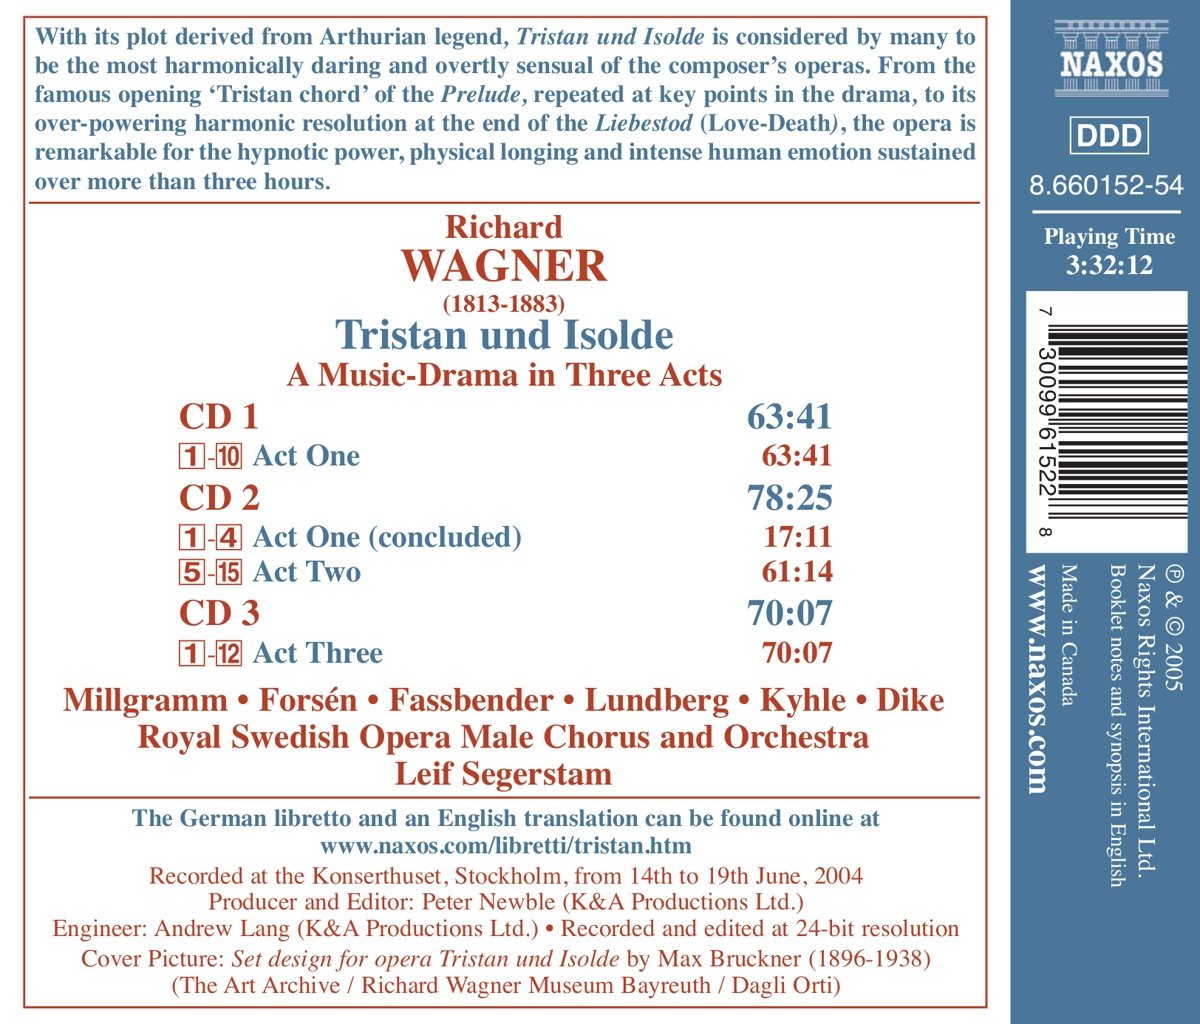 Leif Segerstam 바그너: 트리스탄과 이졸데 (Wagner: Tristan und Isolde) 